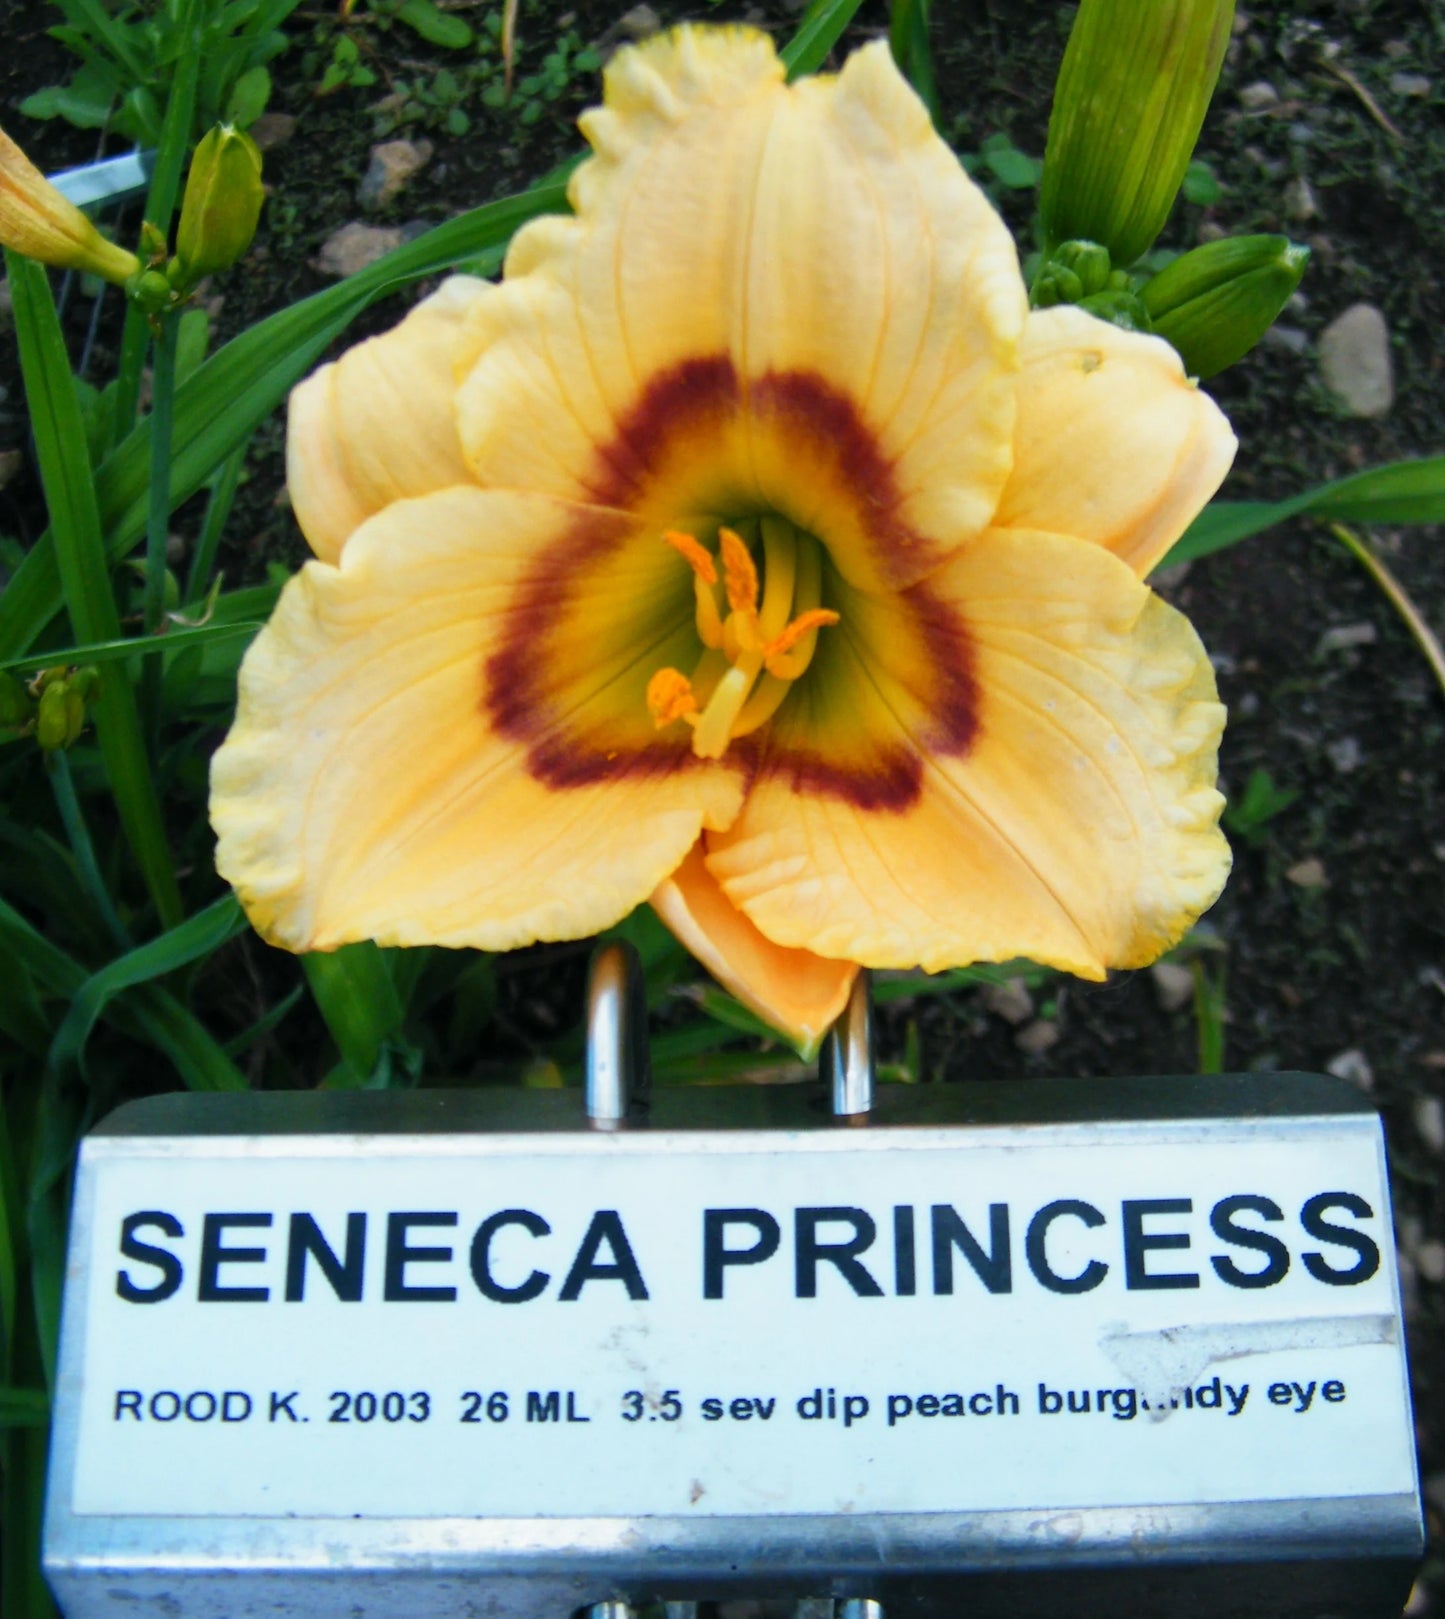 SENECA PRINCESS